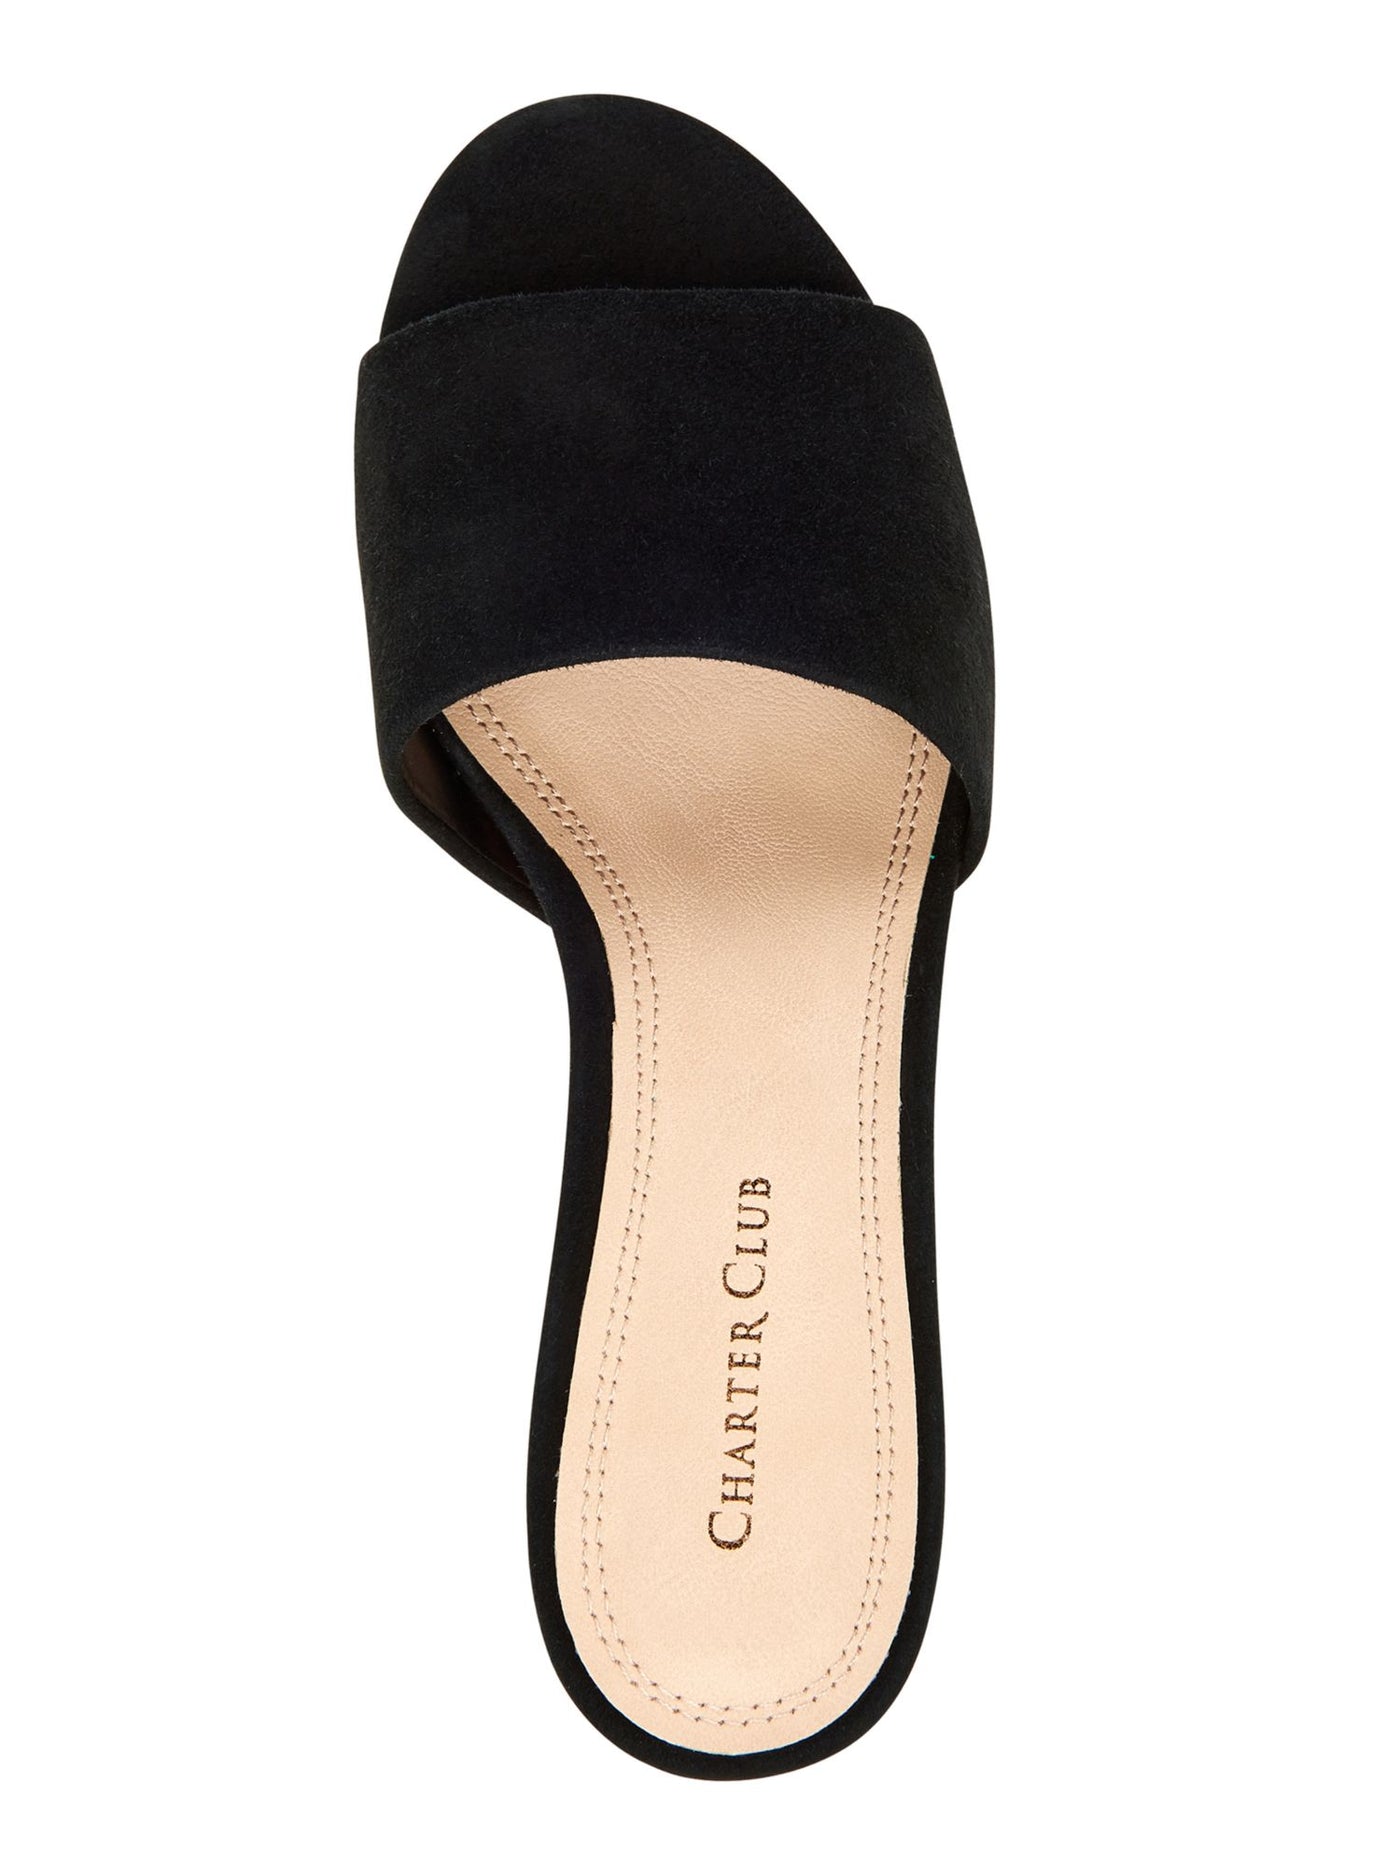 CHARTER CLUB Womens Black Cork Wedge Cushioned Nallahh Almond Toe Wedge Slip On Sandals Shoes M